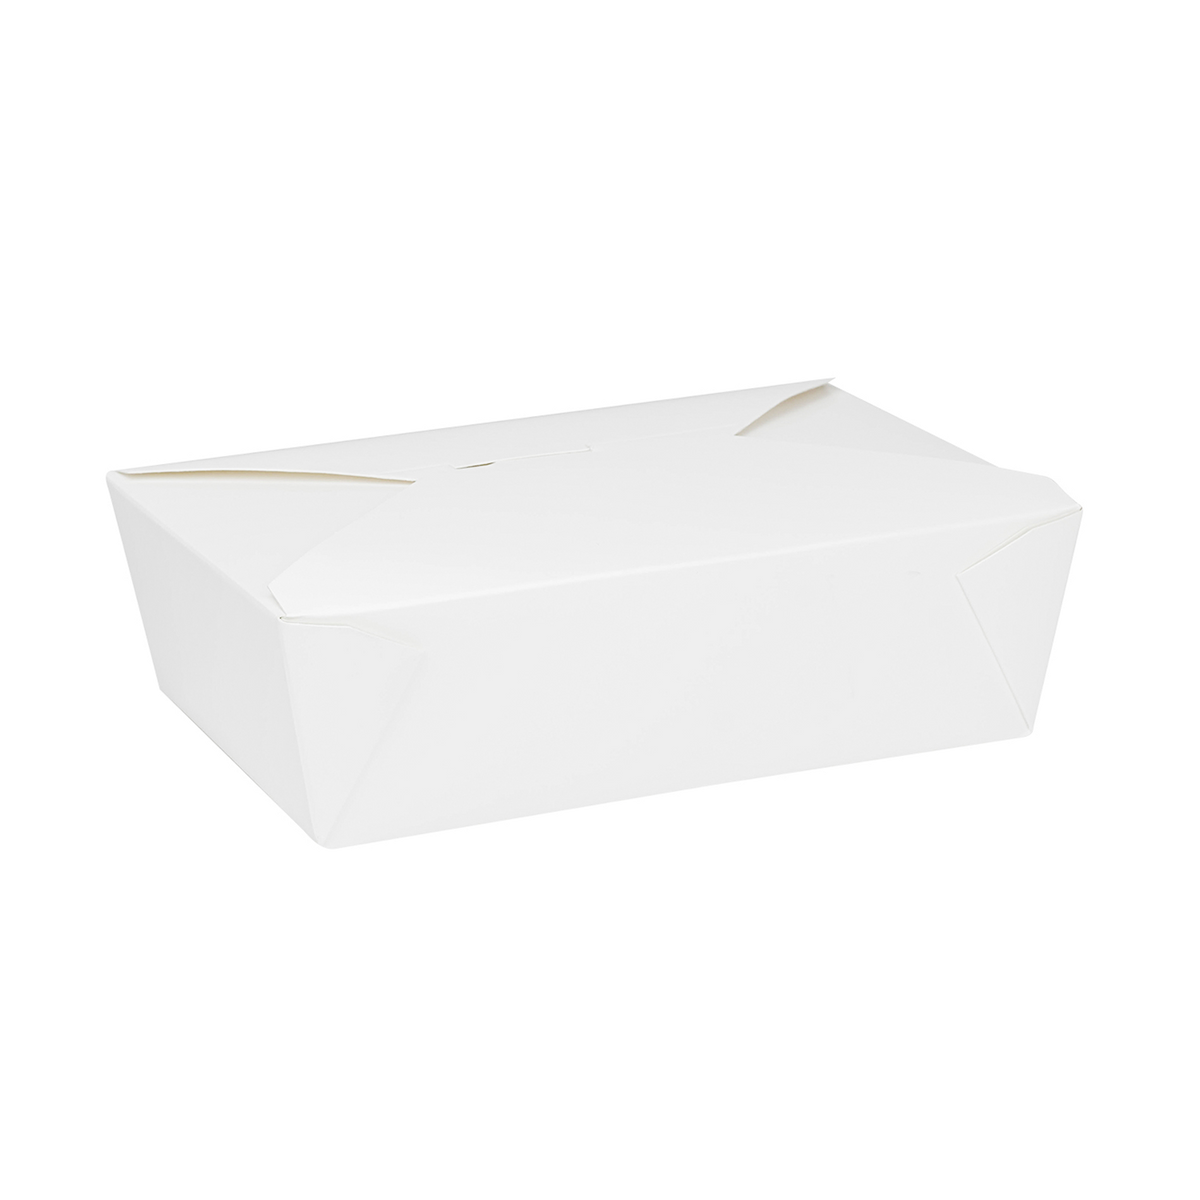 Karat 76 fl oz Fold-To-Go Box #3 - White - 200 ct 